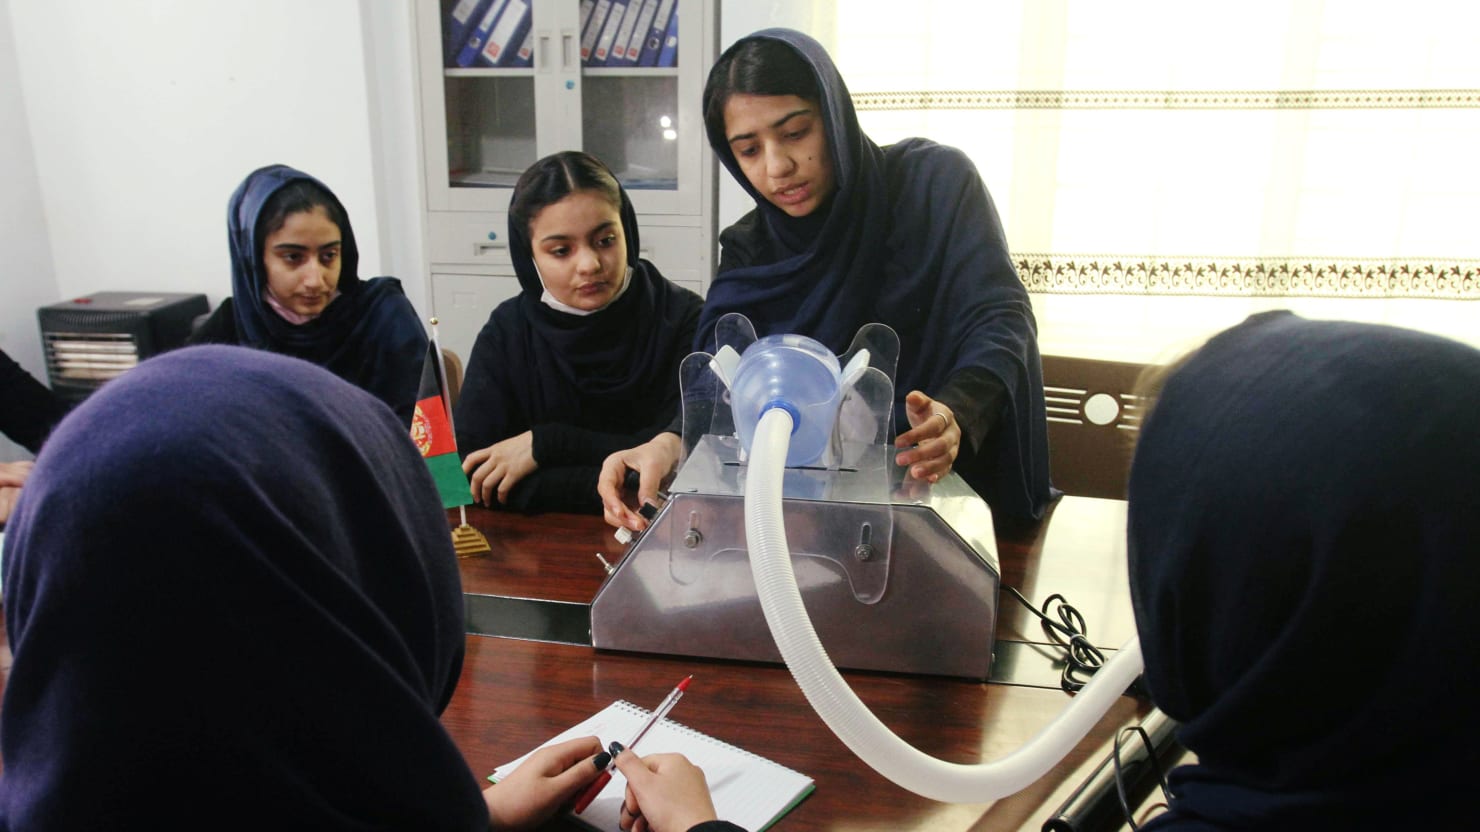 Afghan Girls Robotics Team to U.S. Woman: You Didn’t Save Us - Image